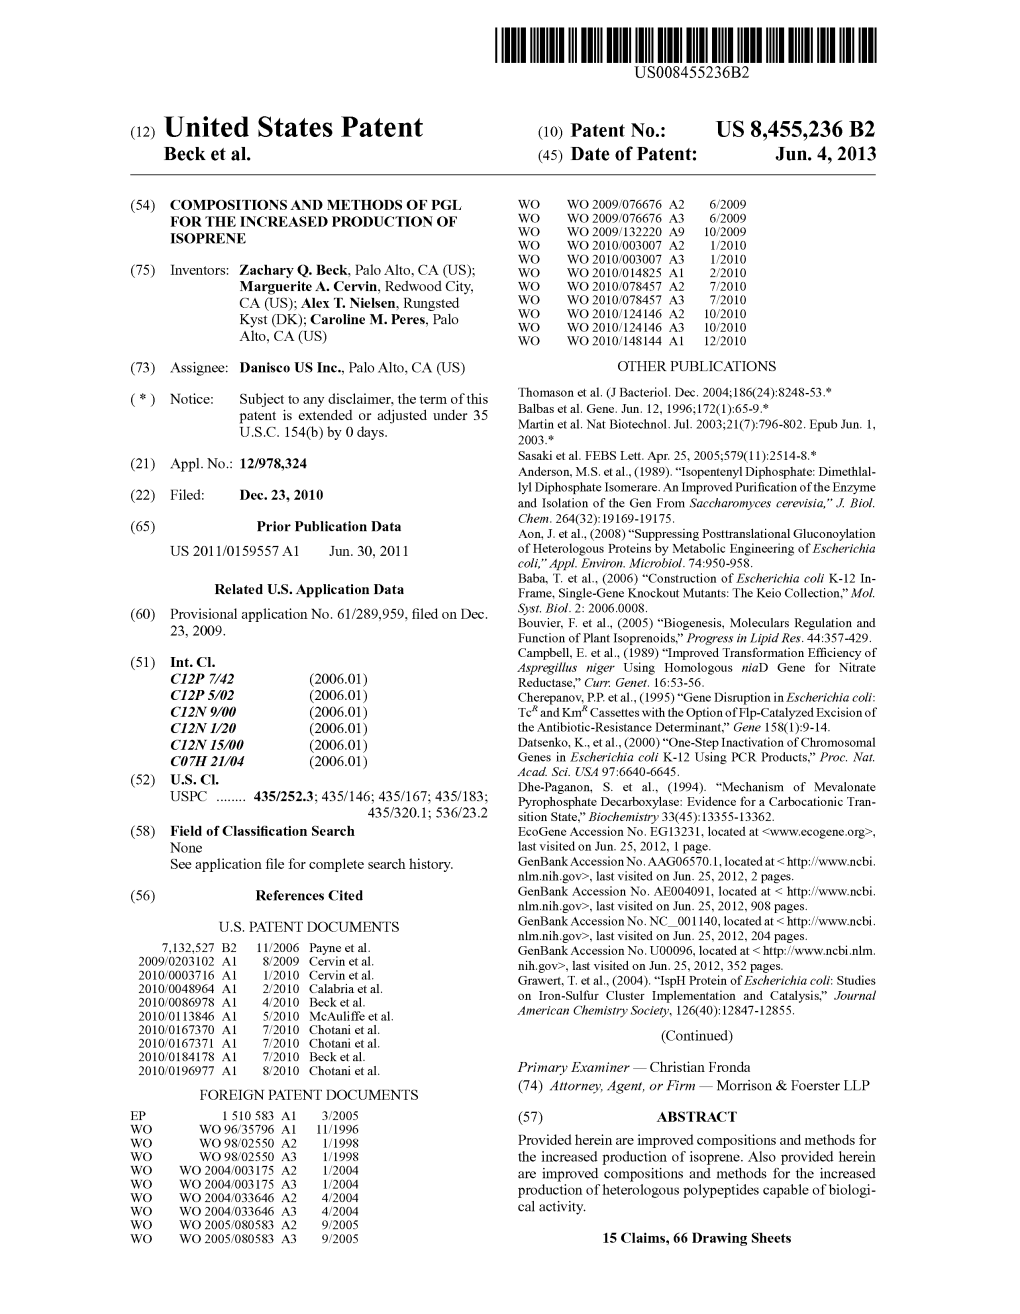 (12) United States Patent (10) Patent No.: US 8,455,236 B2 Beck Et Al